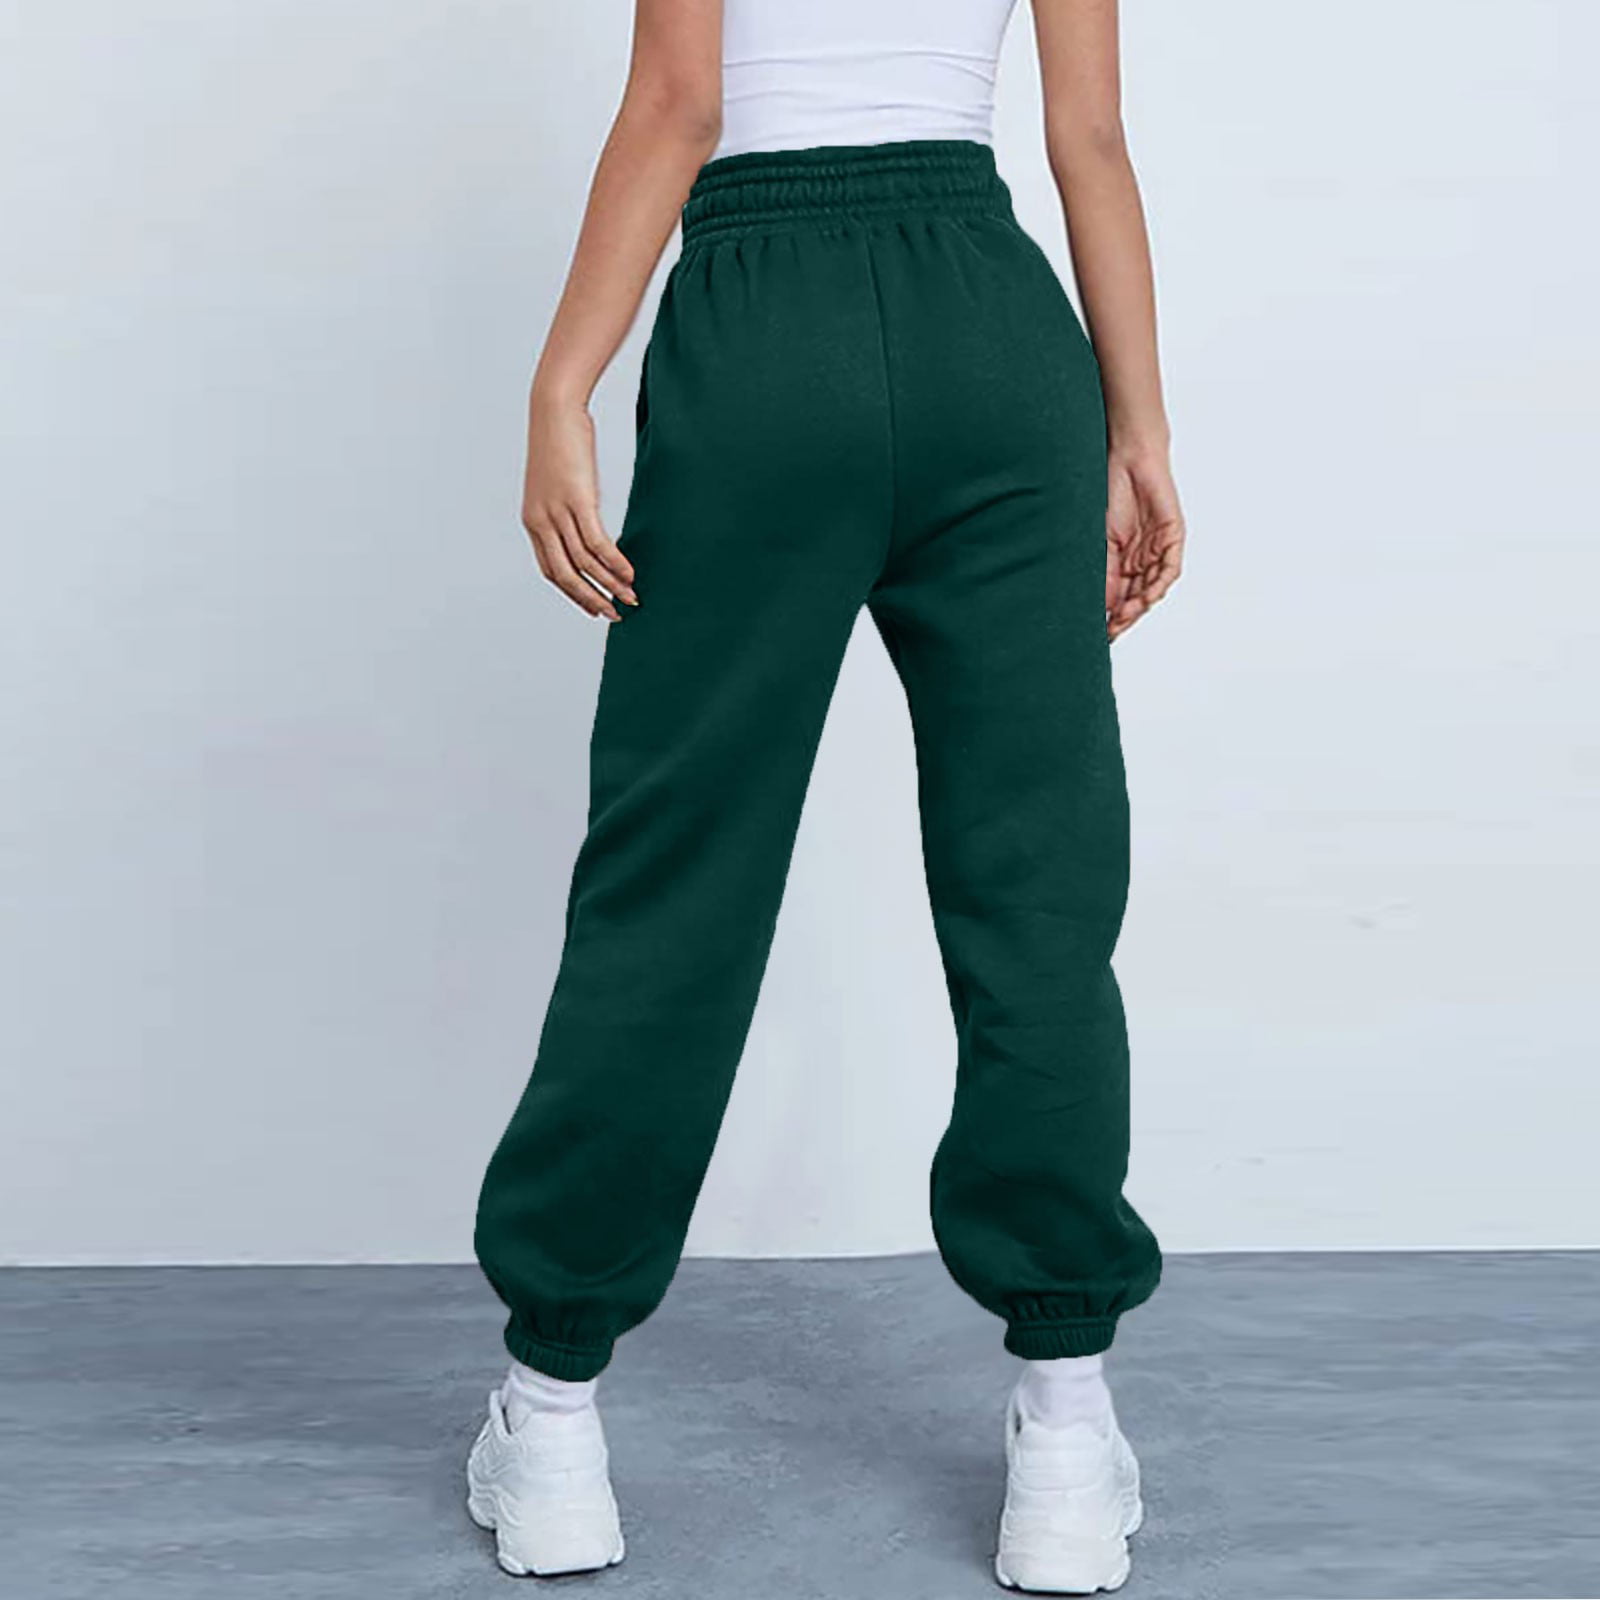 Hanas Pants Women's Casual Fashion Drawstring Elastic Waist Sweatpants  Solid Color Jogging Jogger Pants With Pockets 